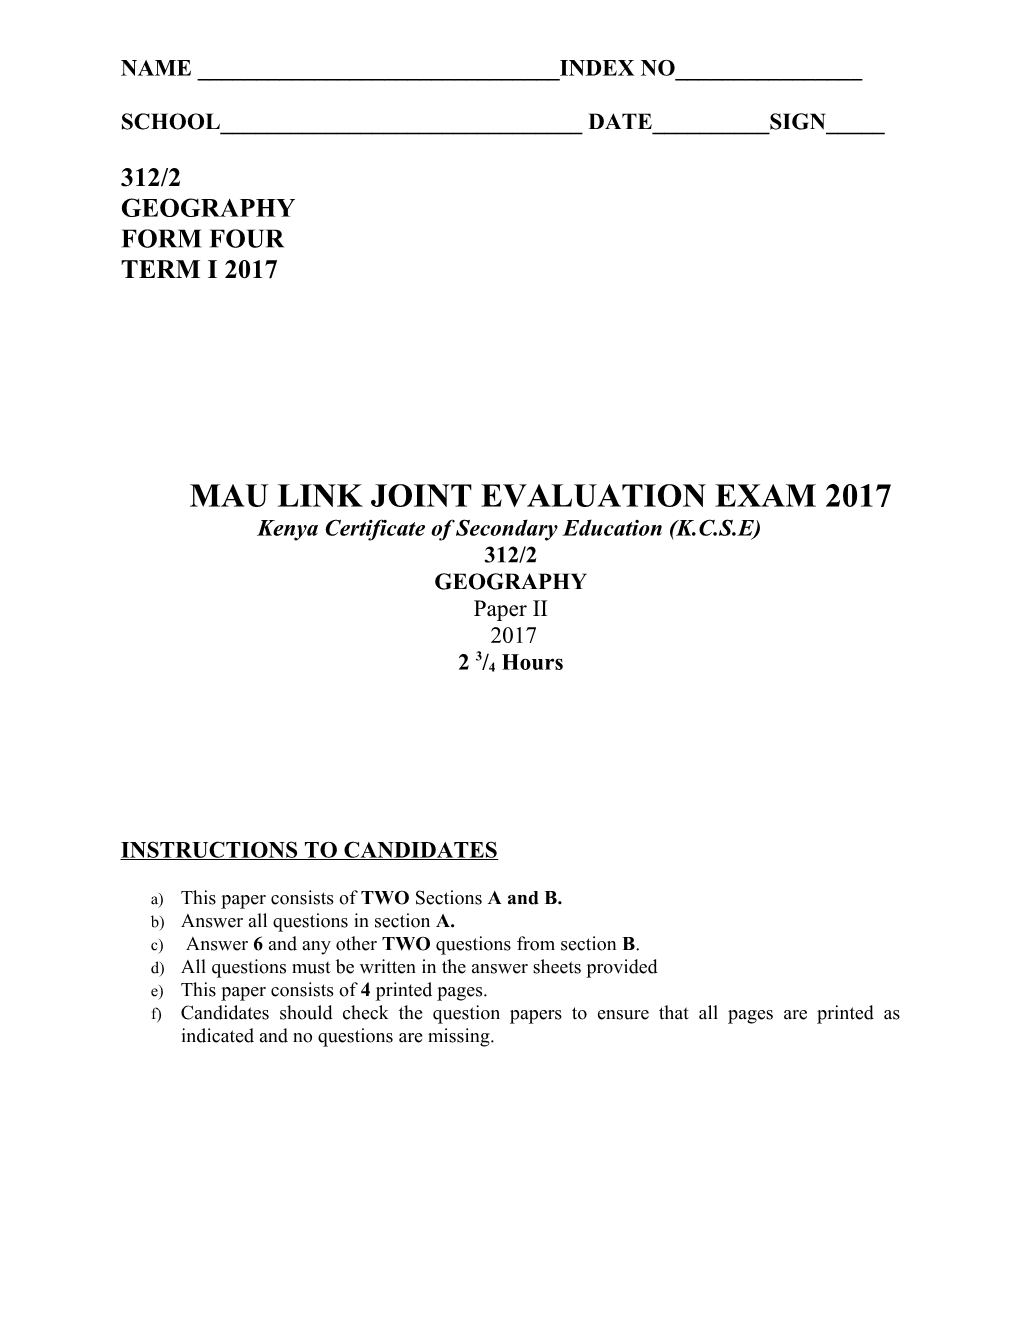 Mau Link Joint Evaluation Exam 2017